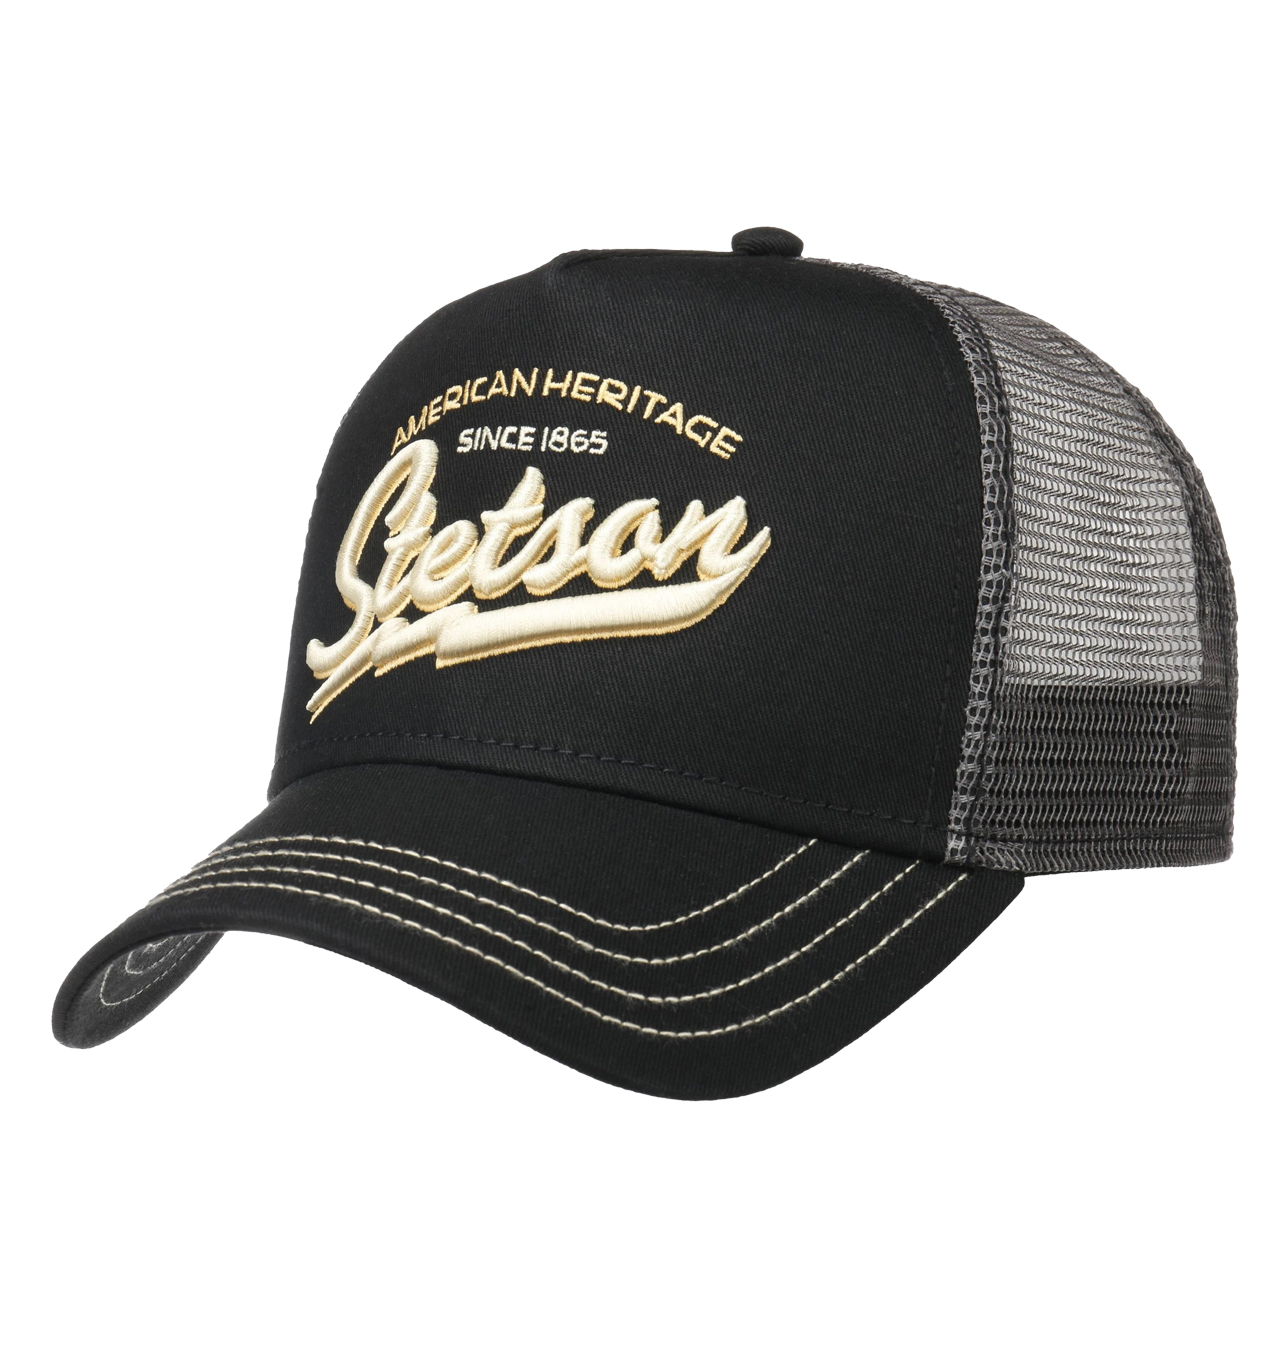 Stetson - Since 1865 Trucker Cap - Black